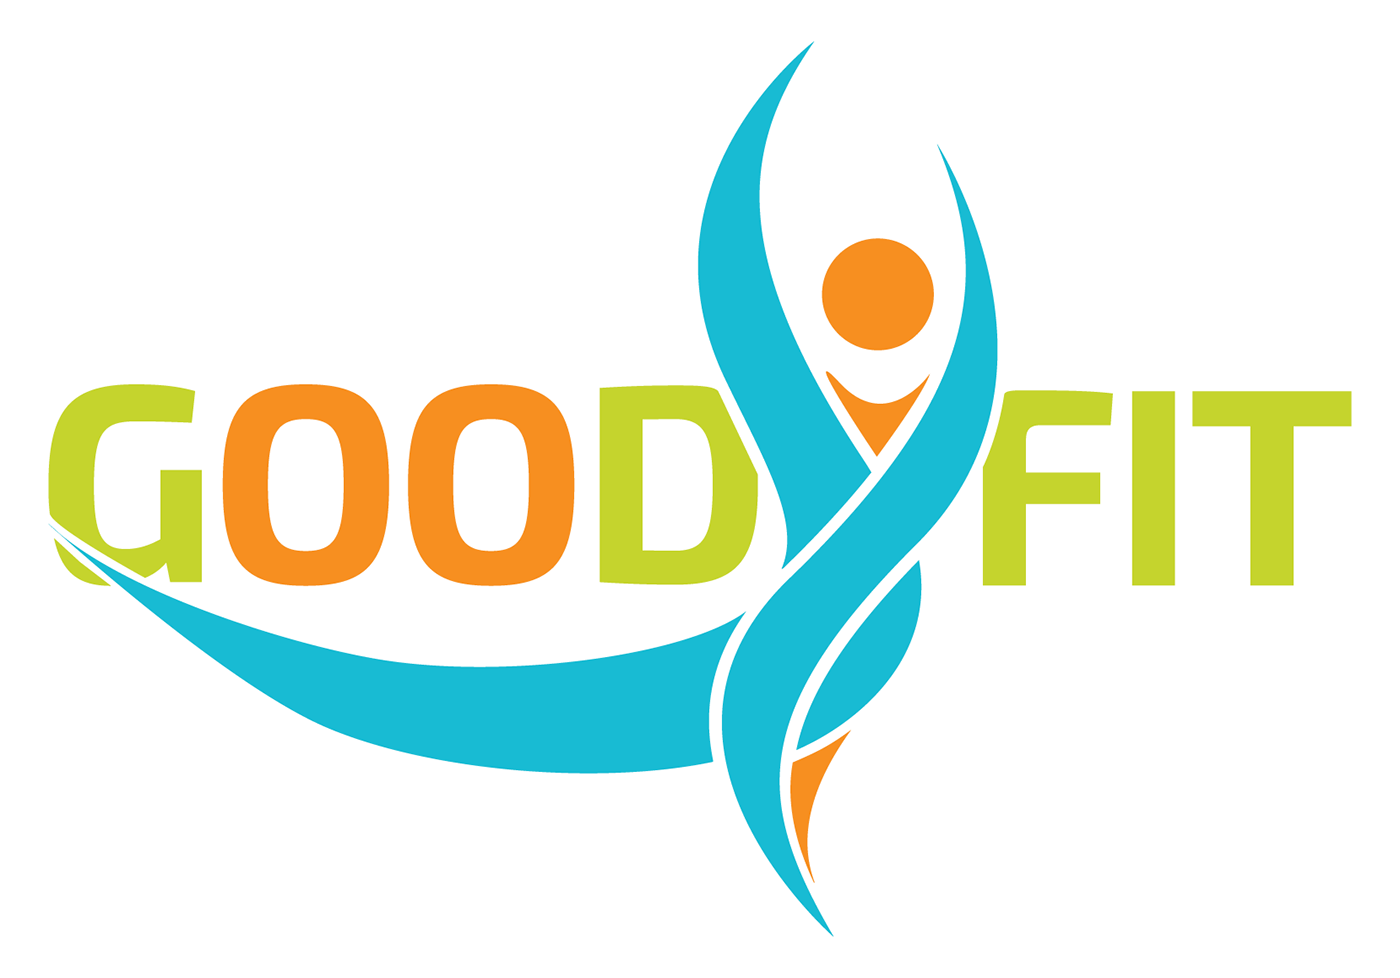 goodfit Logotipo flyer Outdoor Web Design 